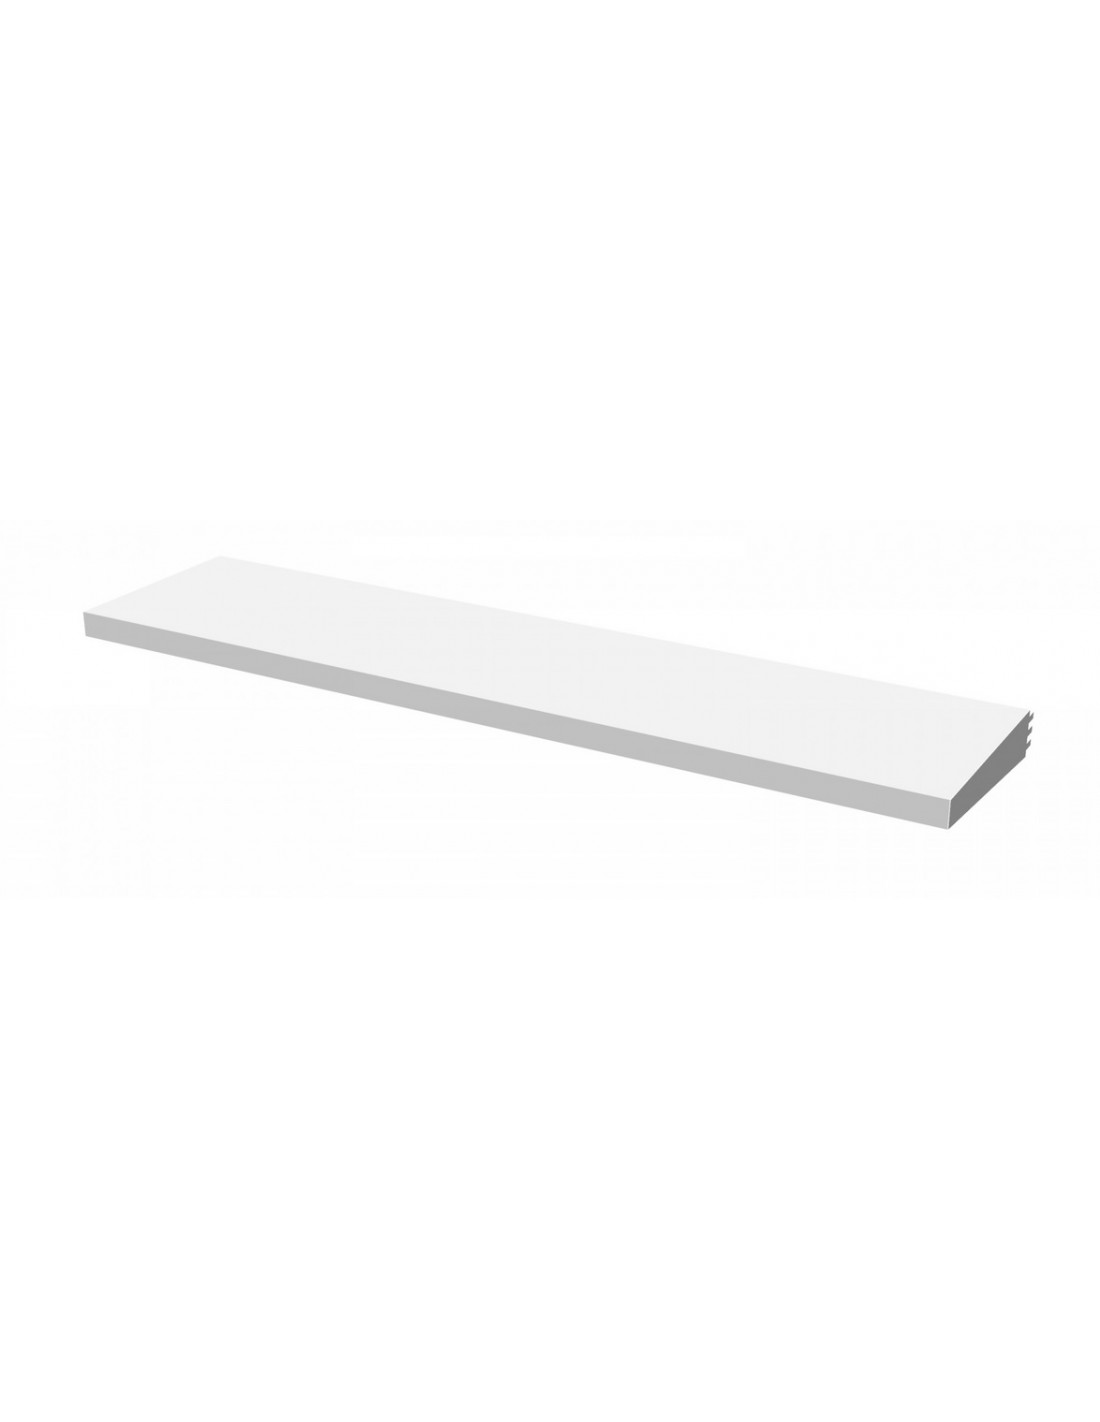 Additional shelf in 125 cm white painted sheet - For mod. VULCANO 60 (No. 2 for VULCANO60 250)